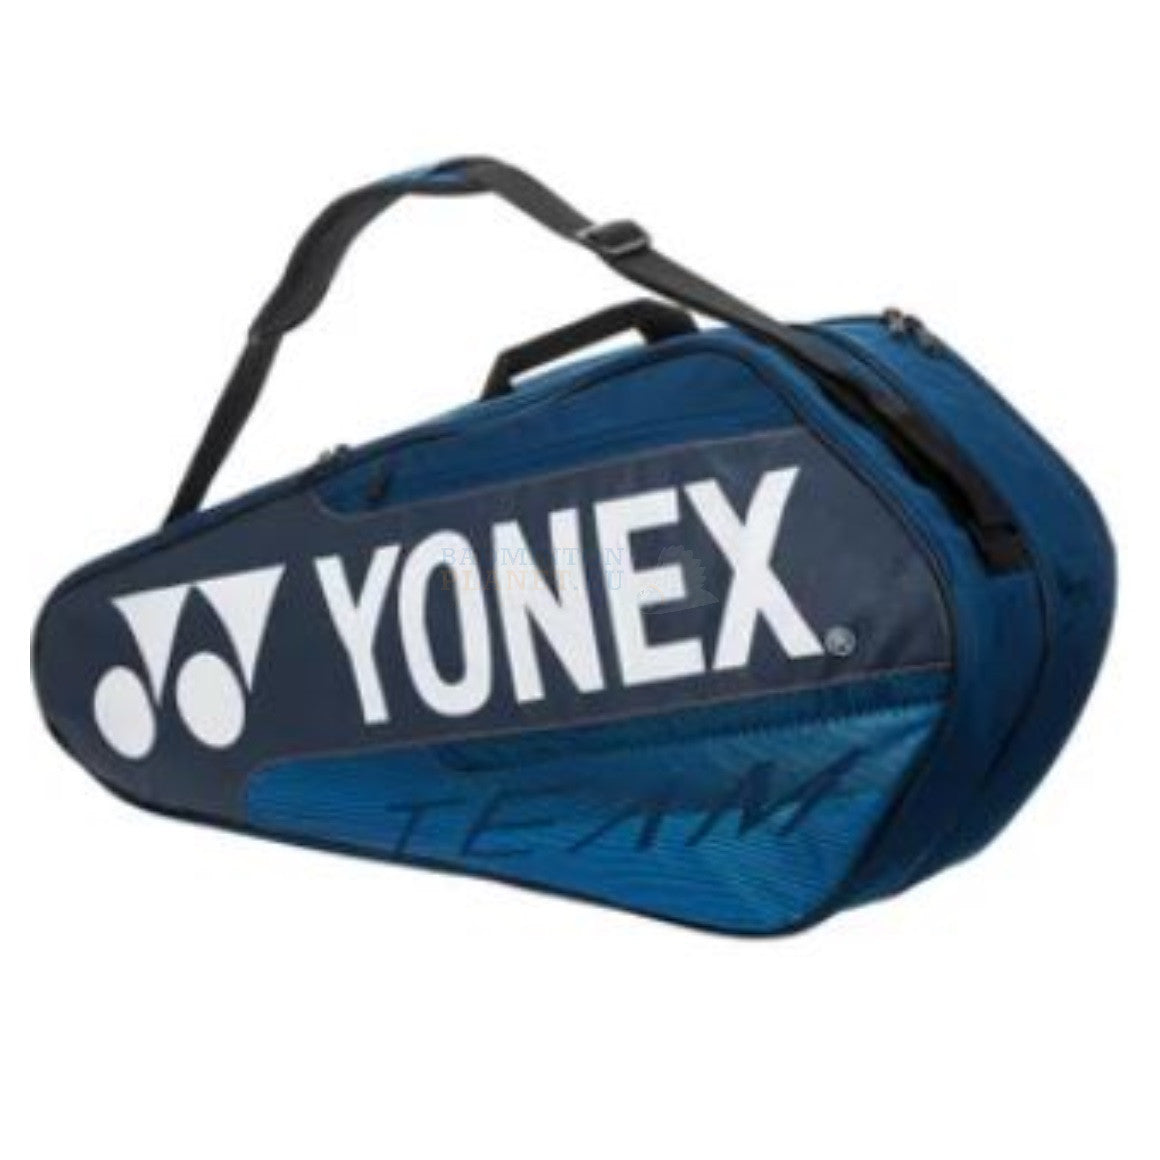 Yonex Badminton Bags at Badminton Warehouse